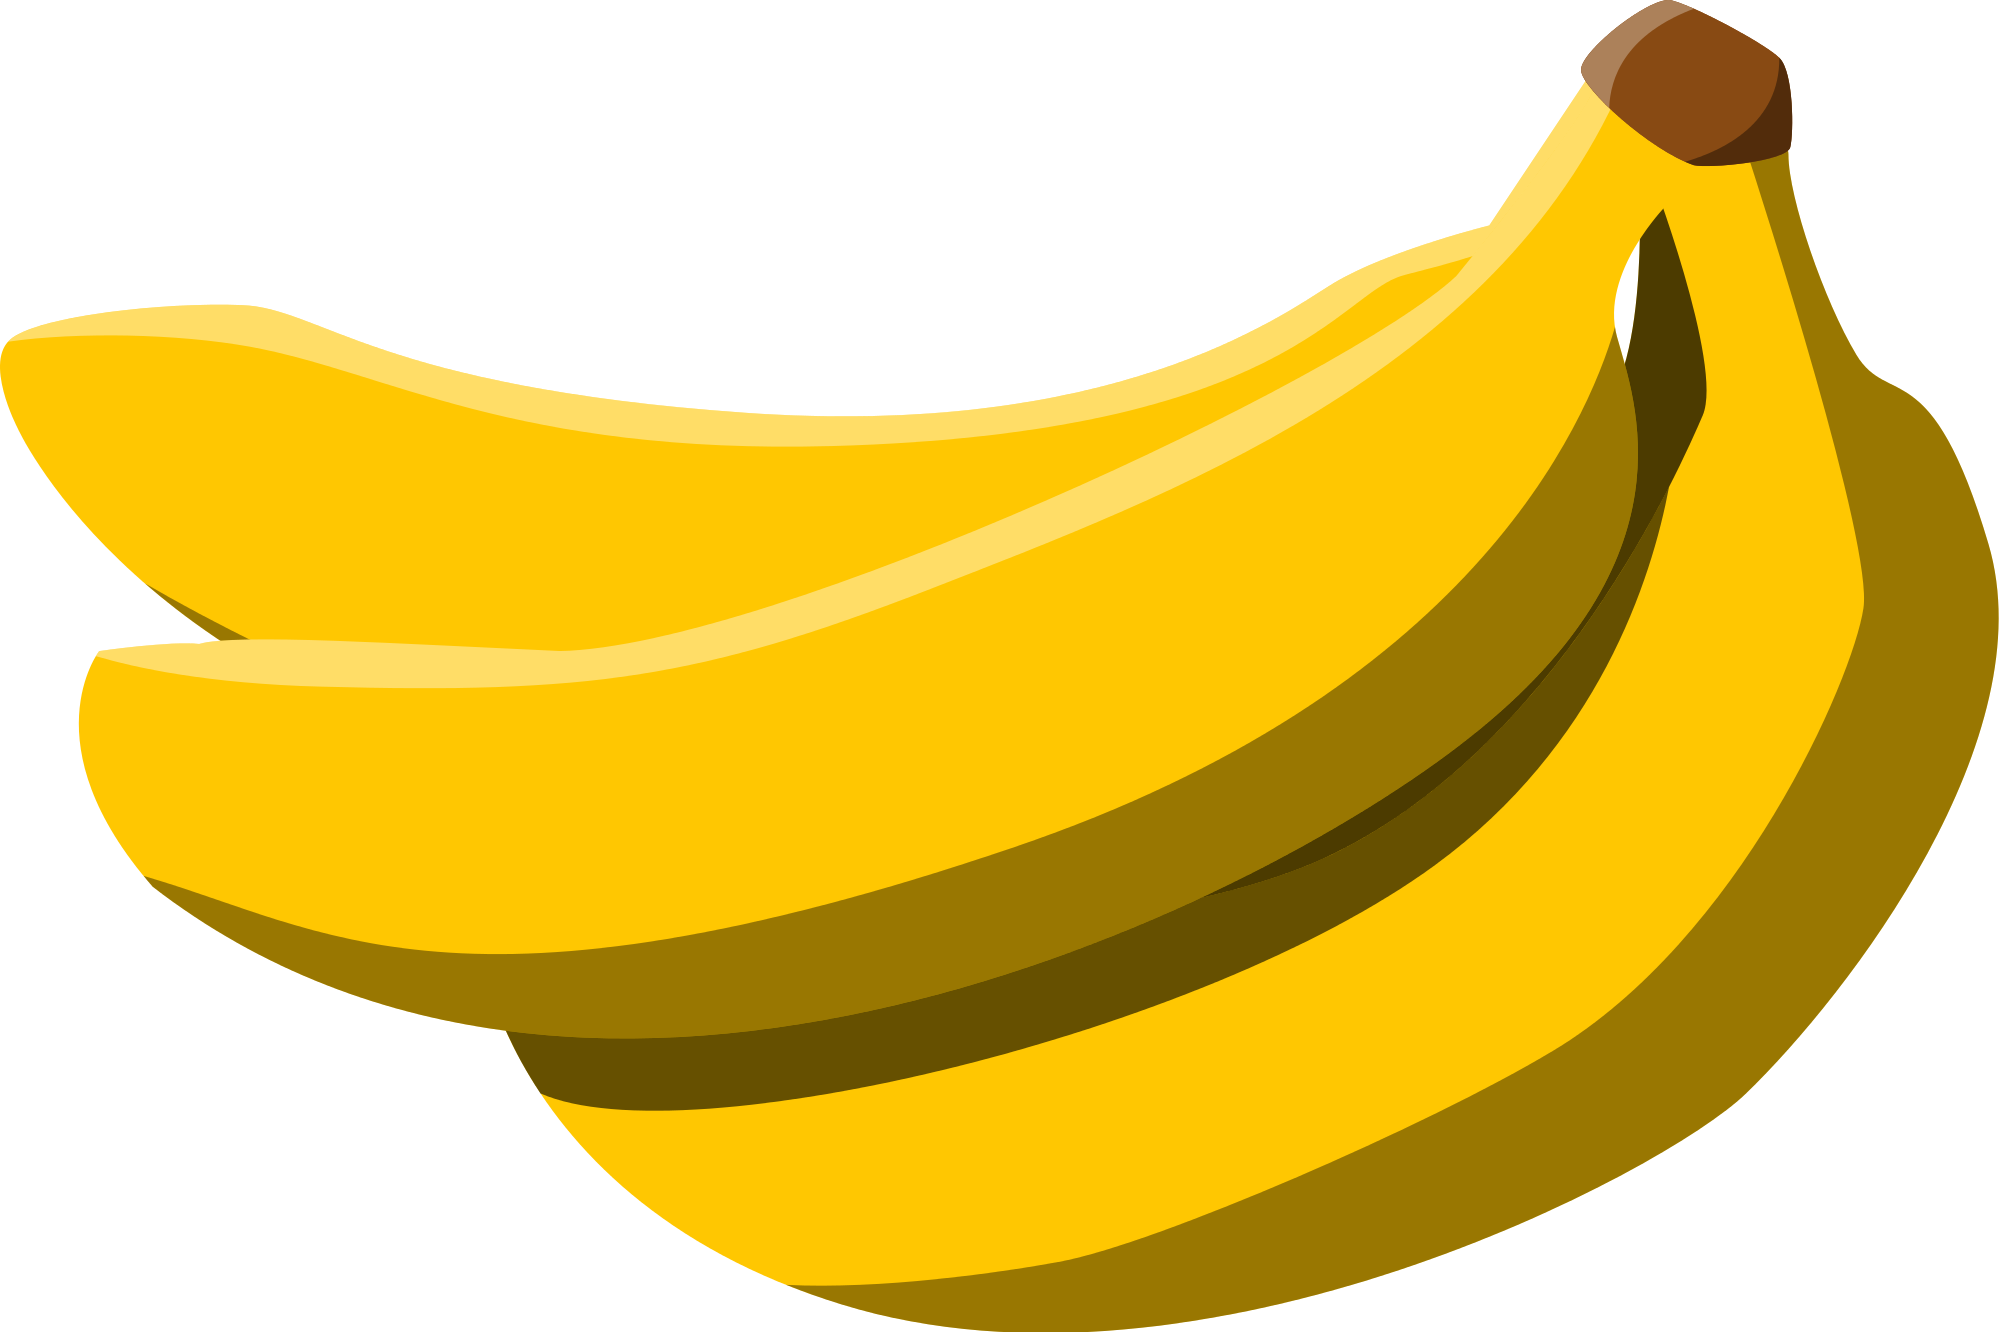 Food clipart banana. File bananas svg wikimedia